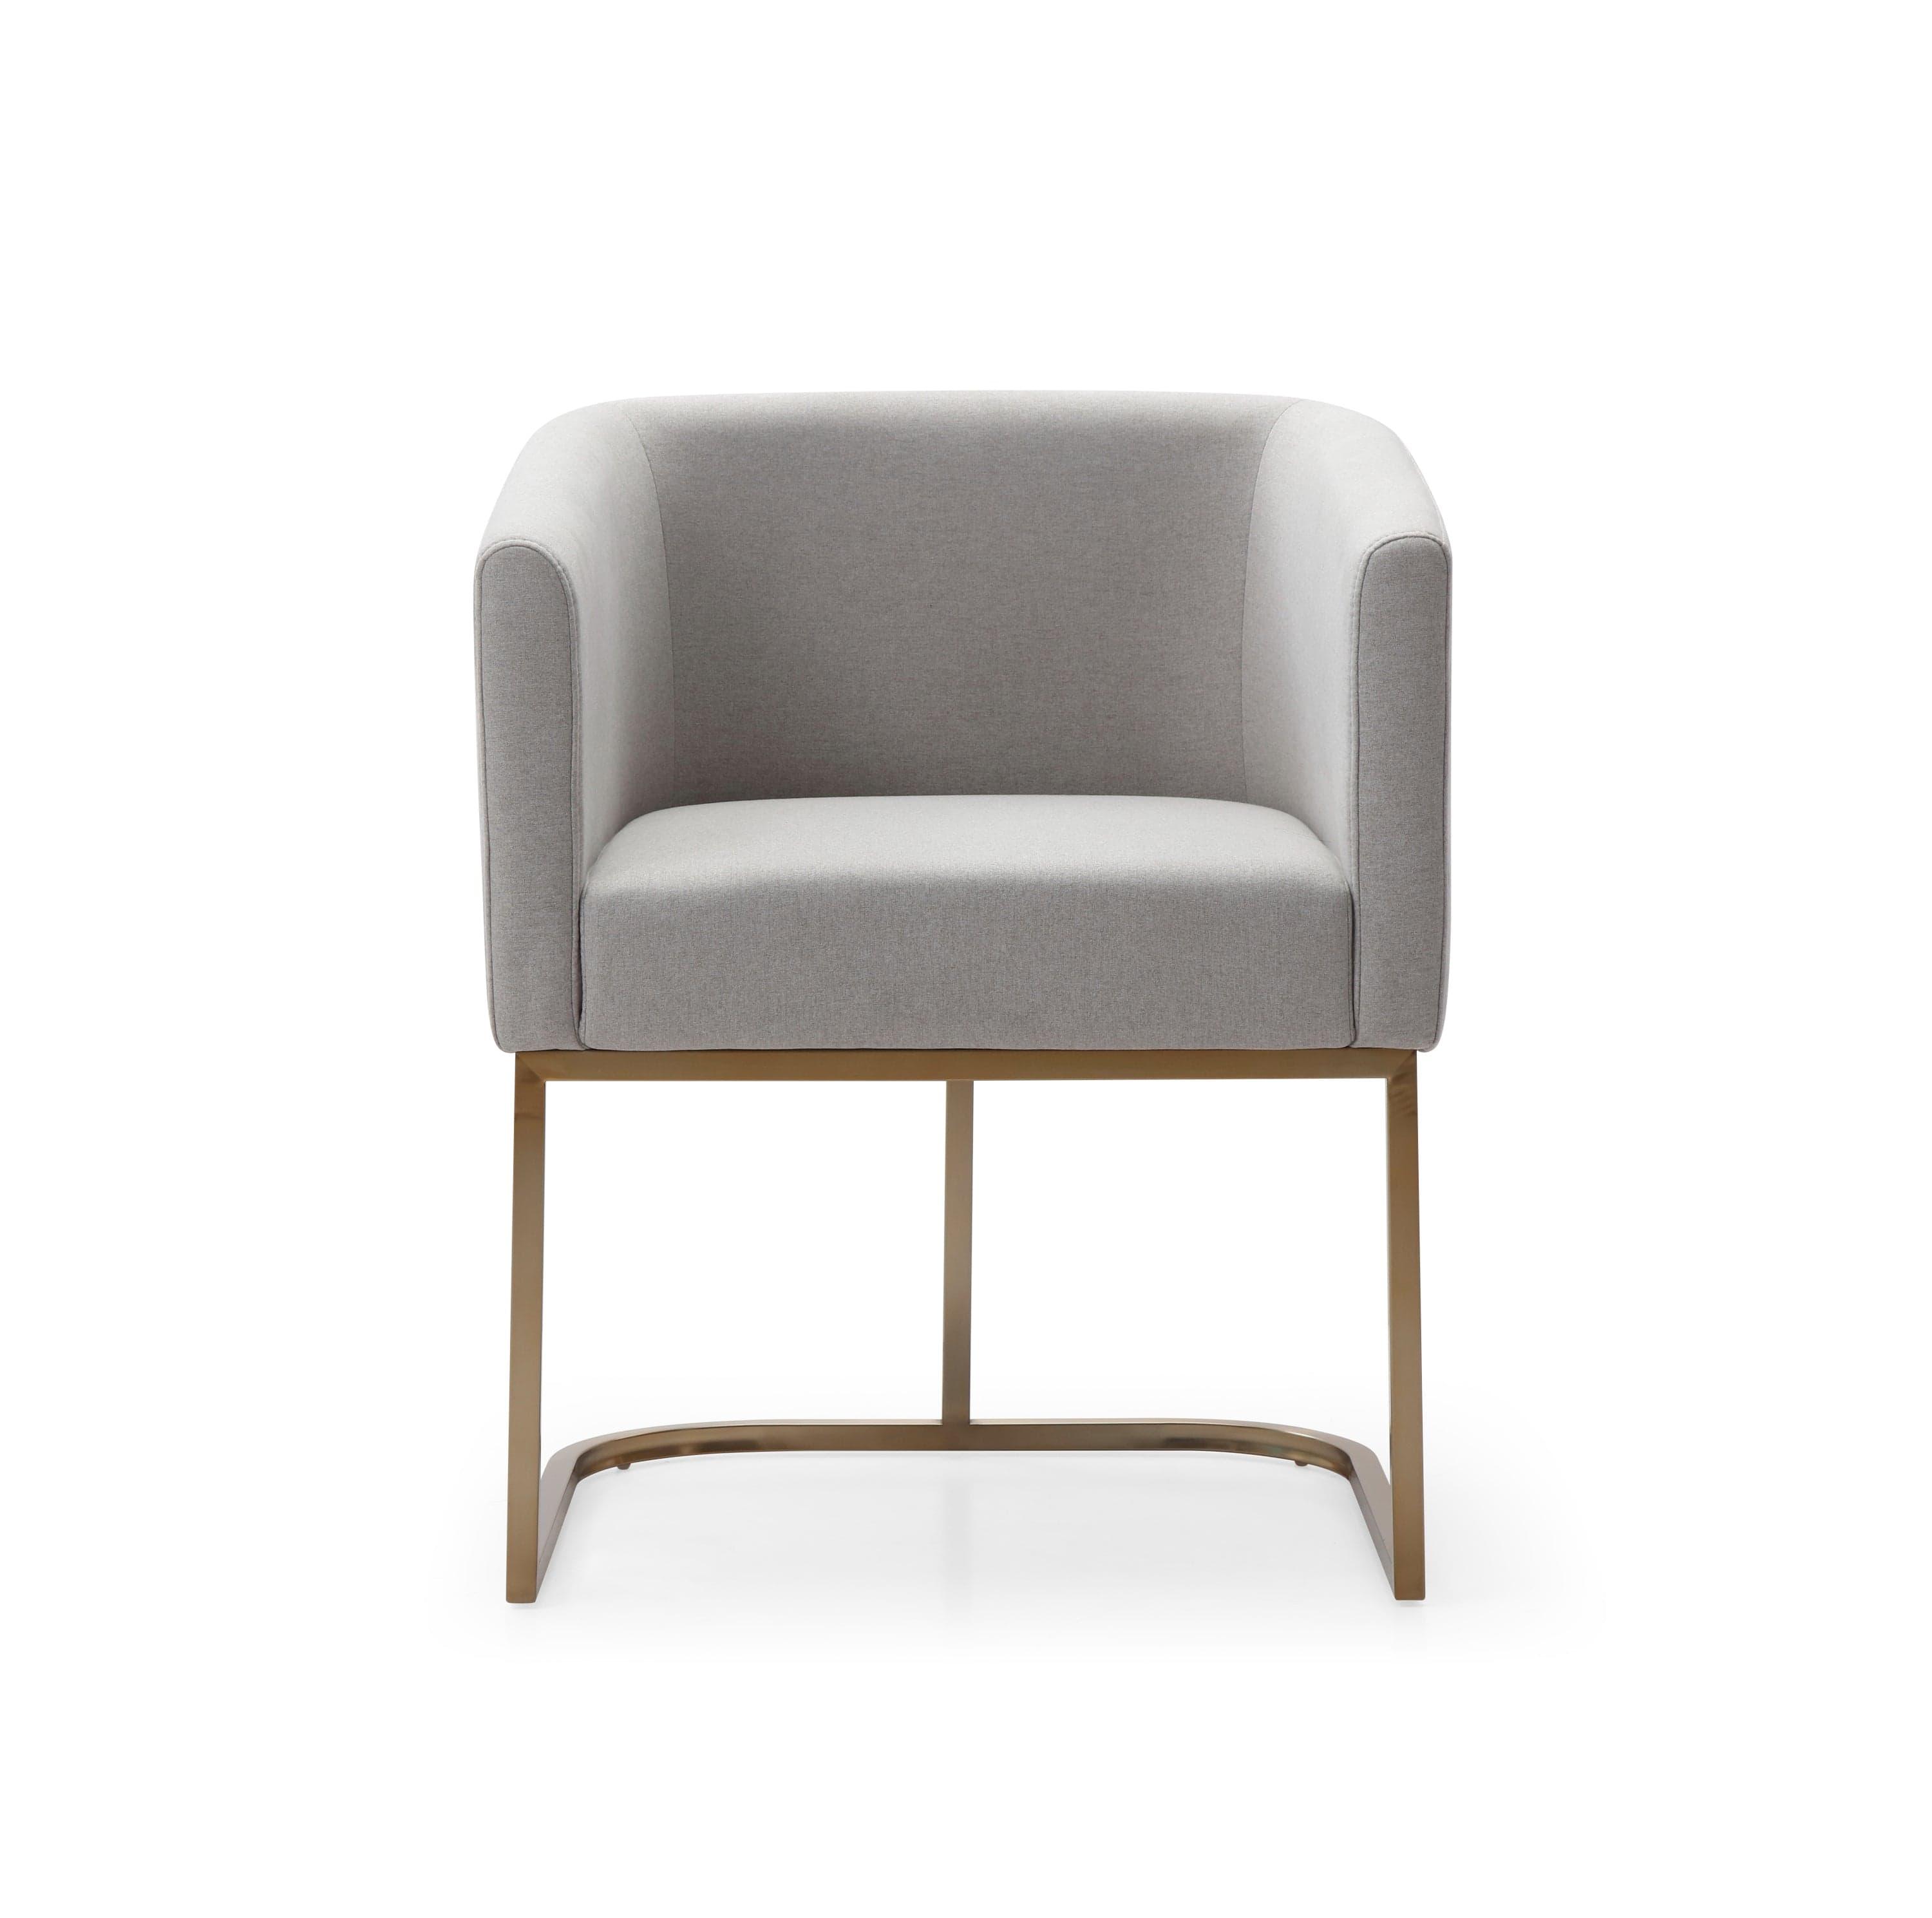 Shop Modrest Yukon Modern Light Grey Fabric & Antique Brass Dining Chair Mademoiselle Home Decor